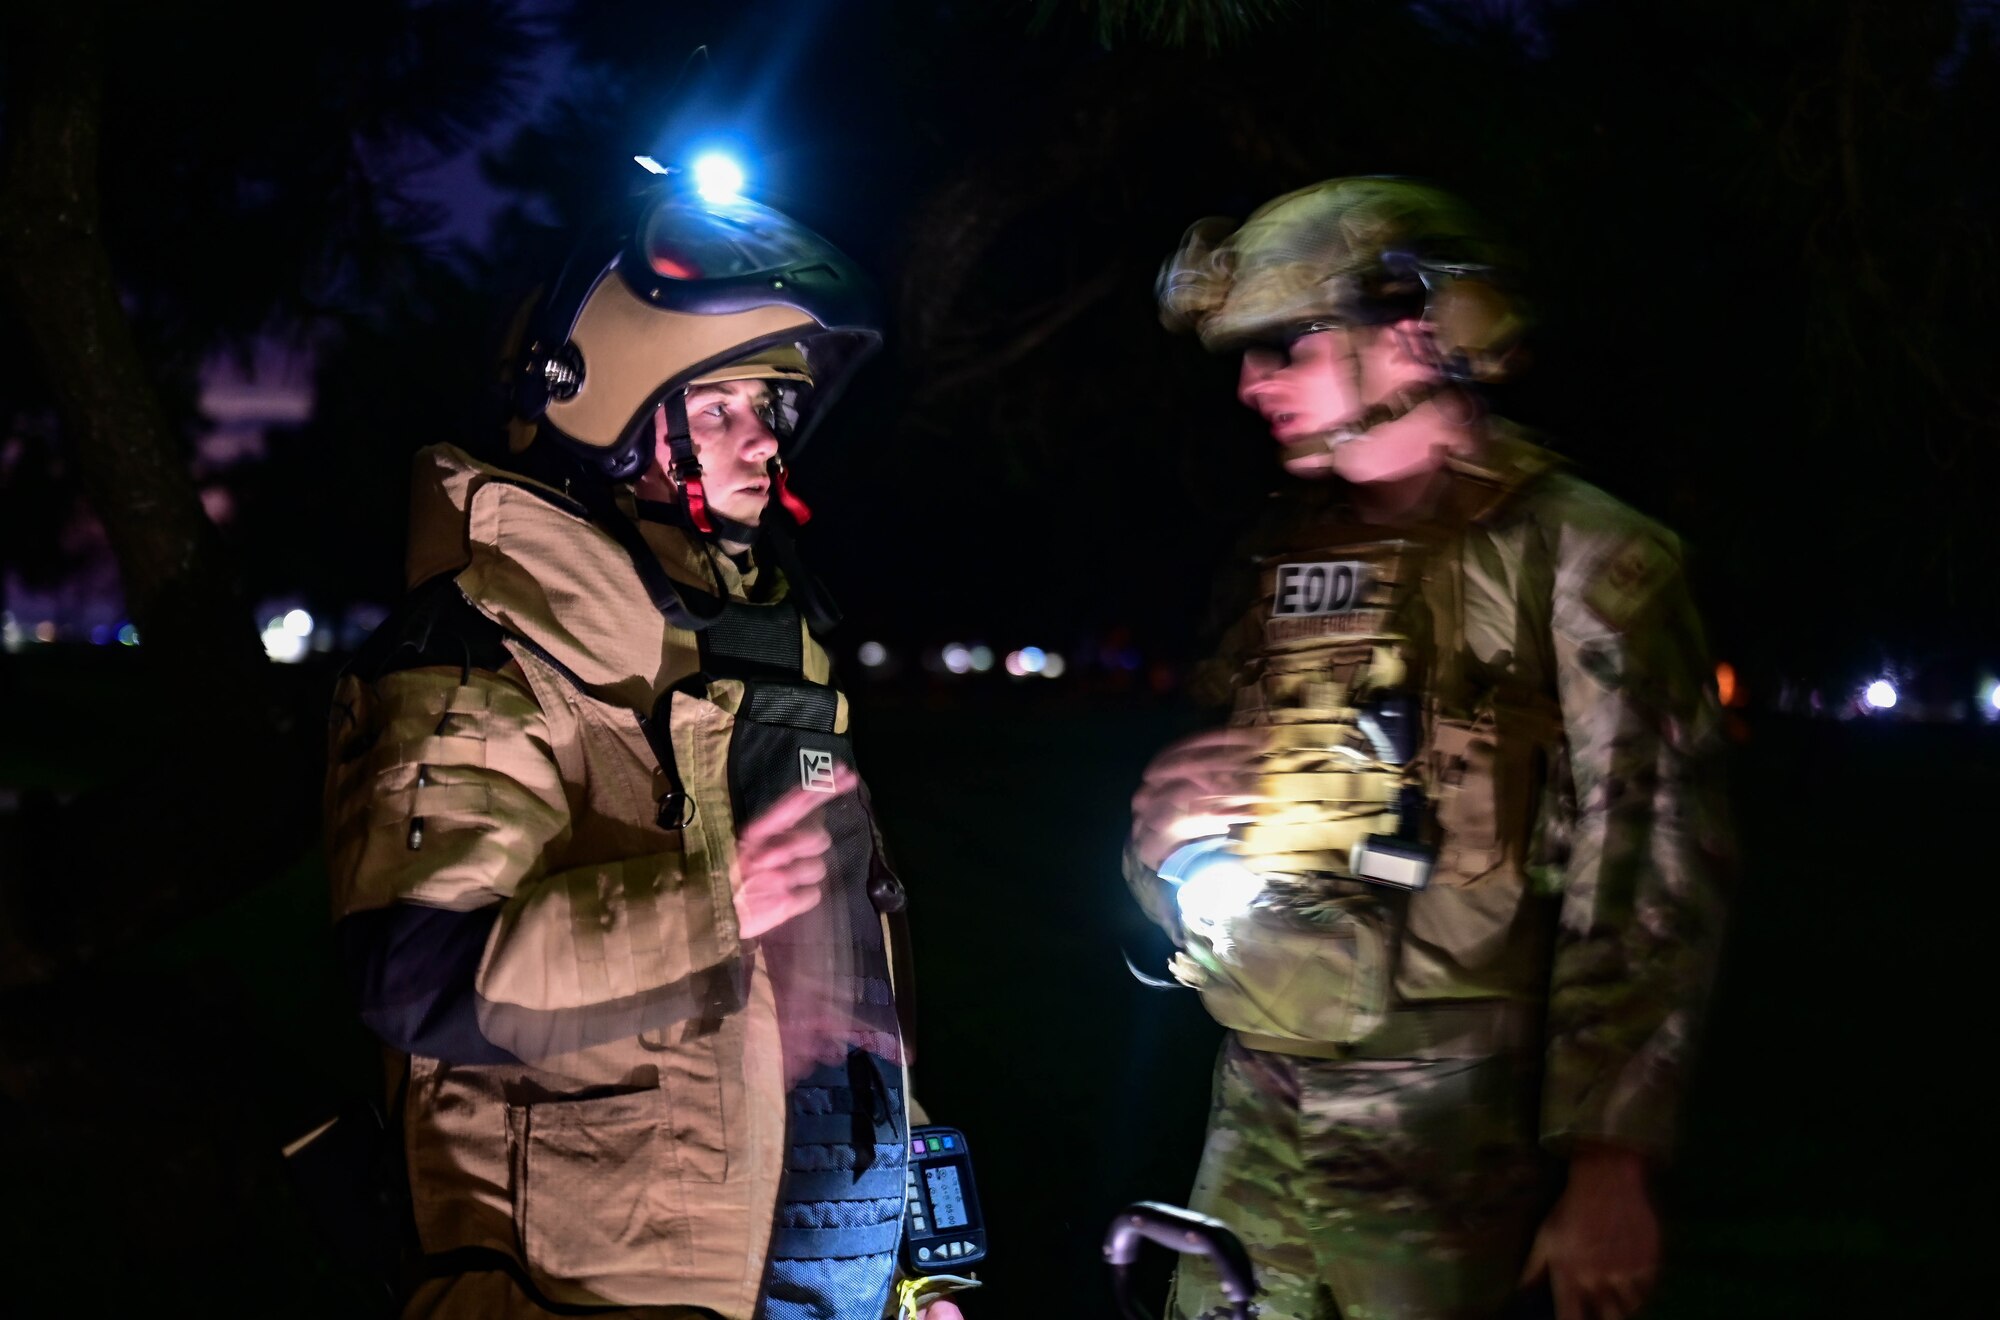 Two men in military clothing speak at night.